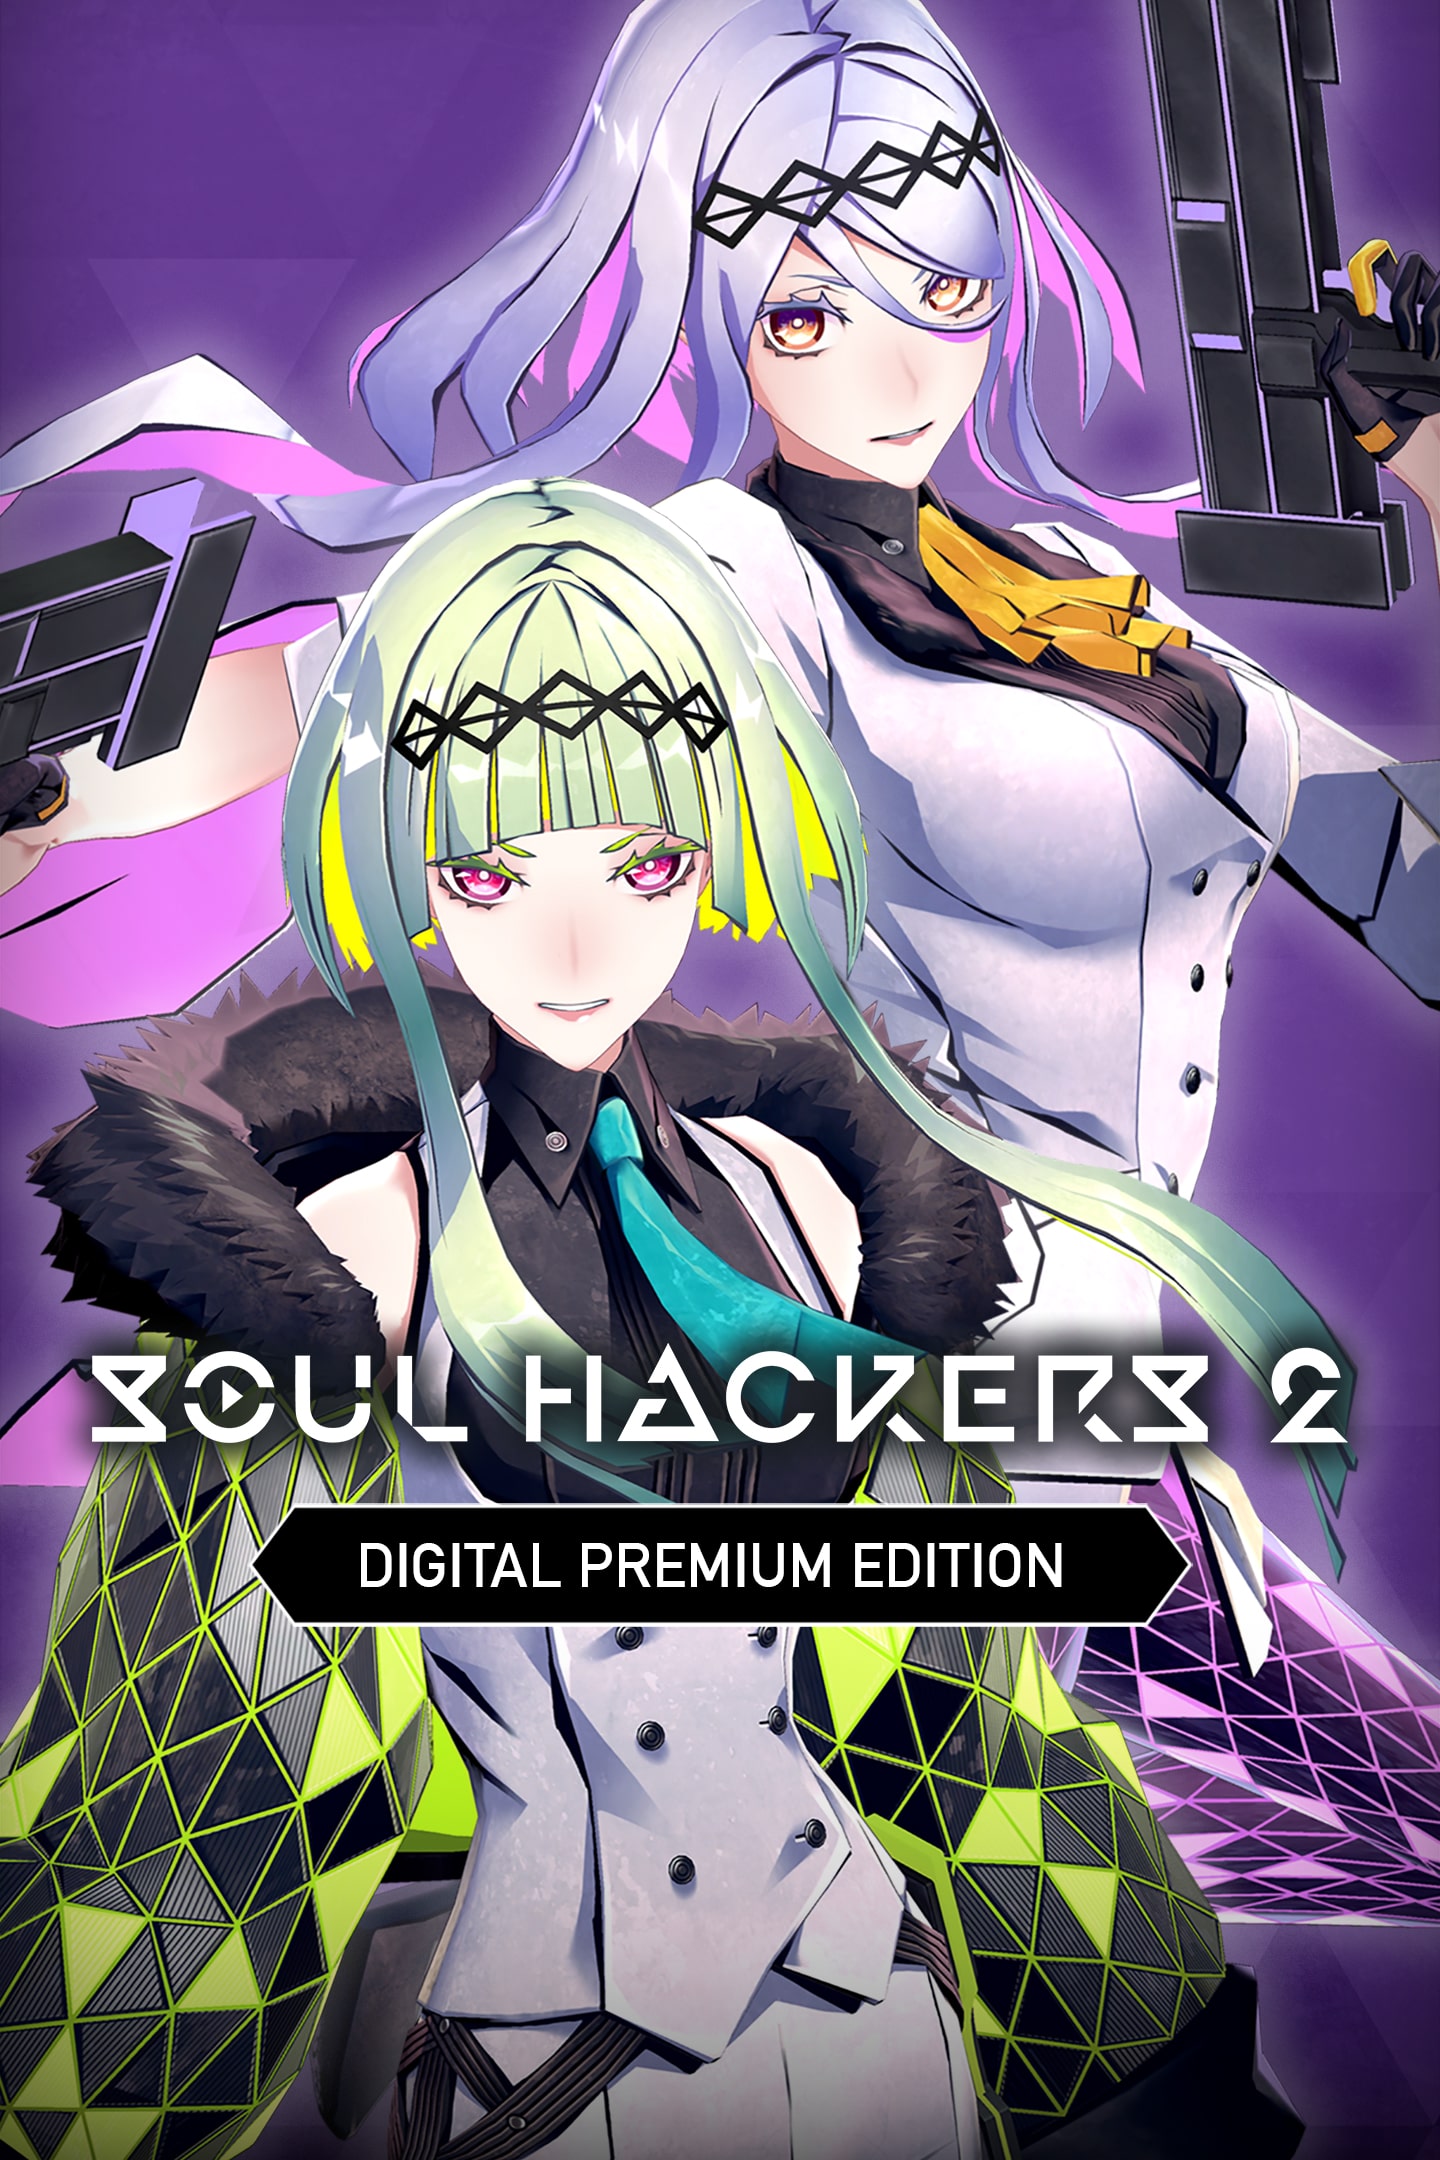 Soul Hackers 2 - Playstation 4 – Retro Raven Games